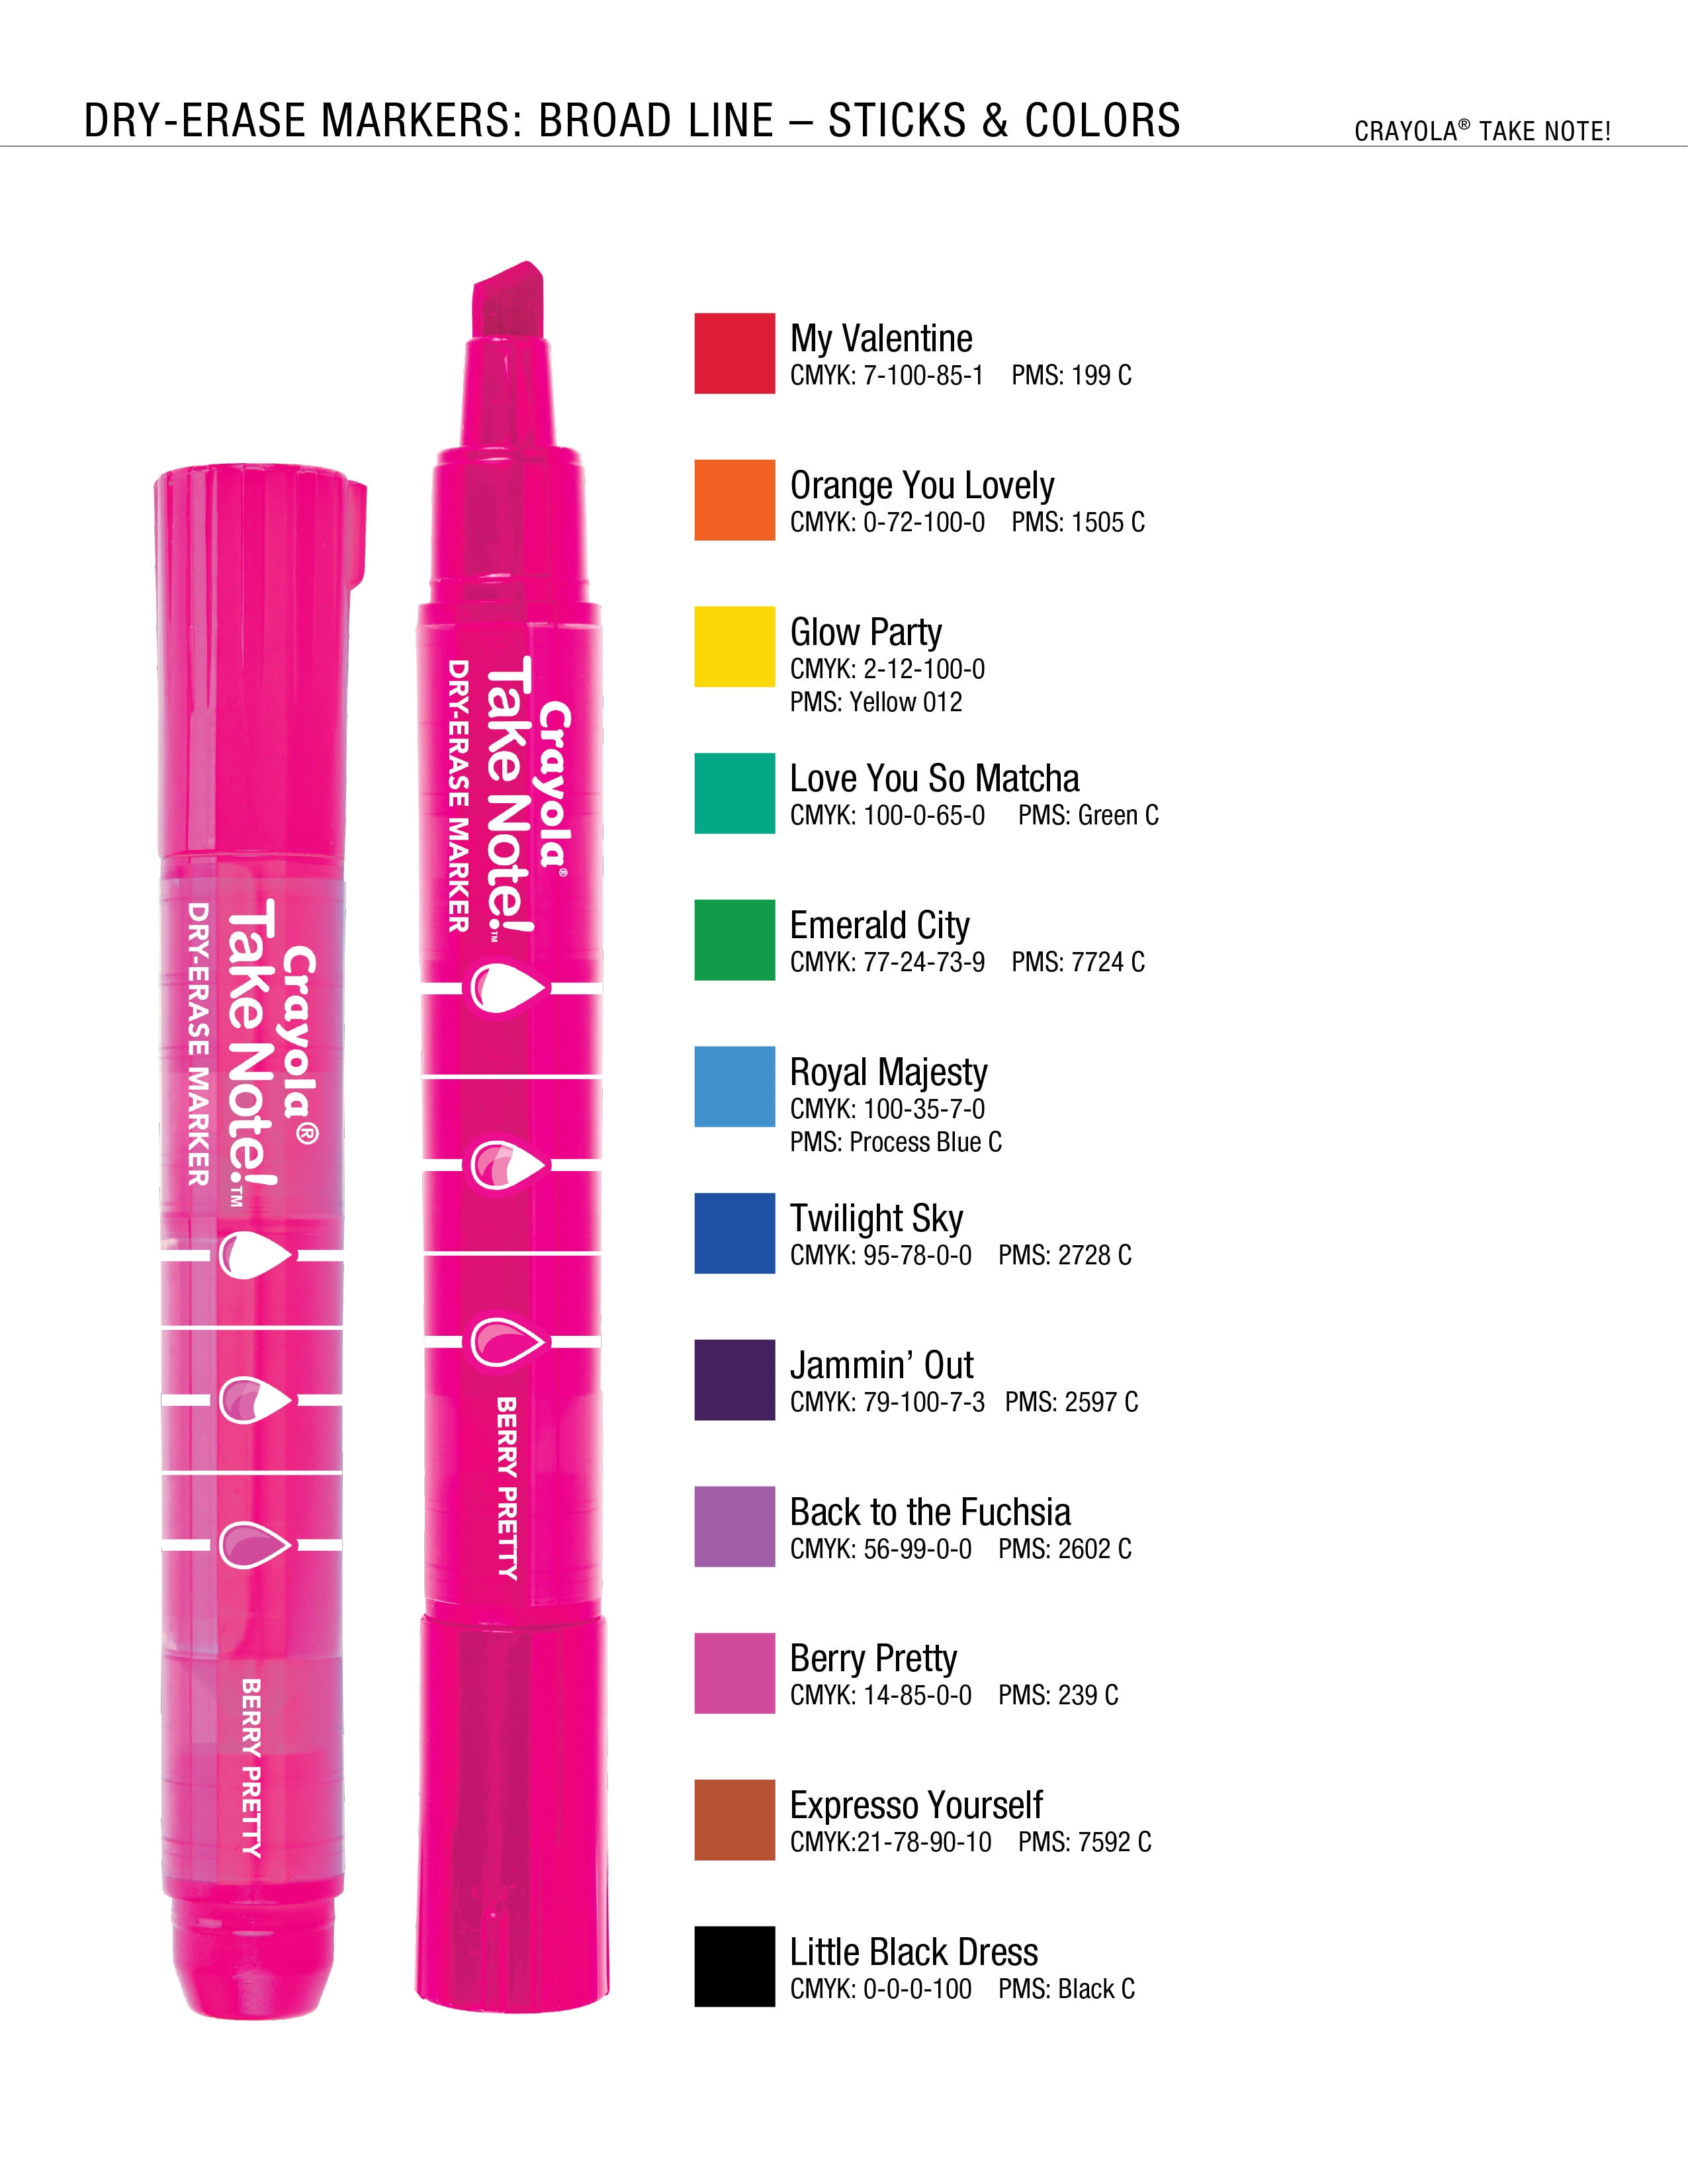 ✨NEW✨ Crayola Take Note Dry Erass Marker Review! #dryerase